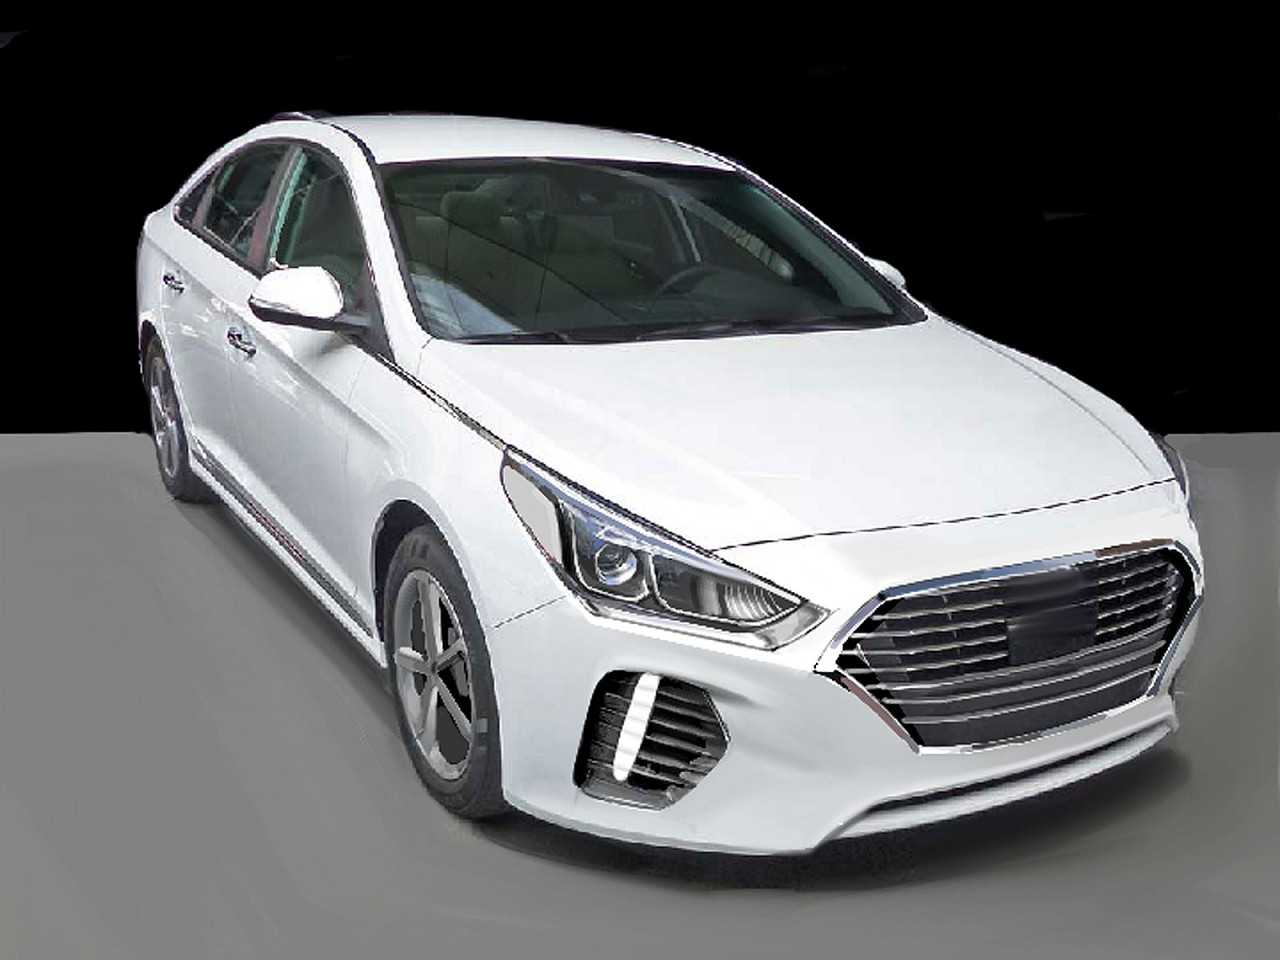 Facelift do Hyundai Sonata (imagem: Hyundai-blog.com)